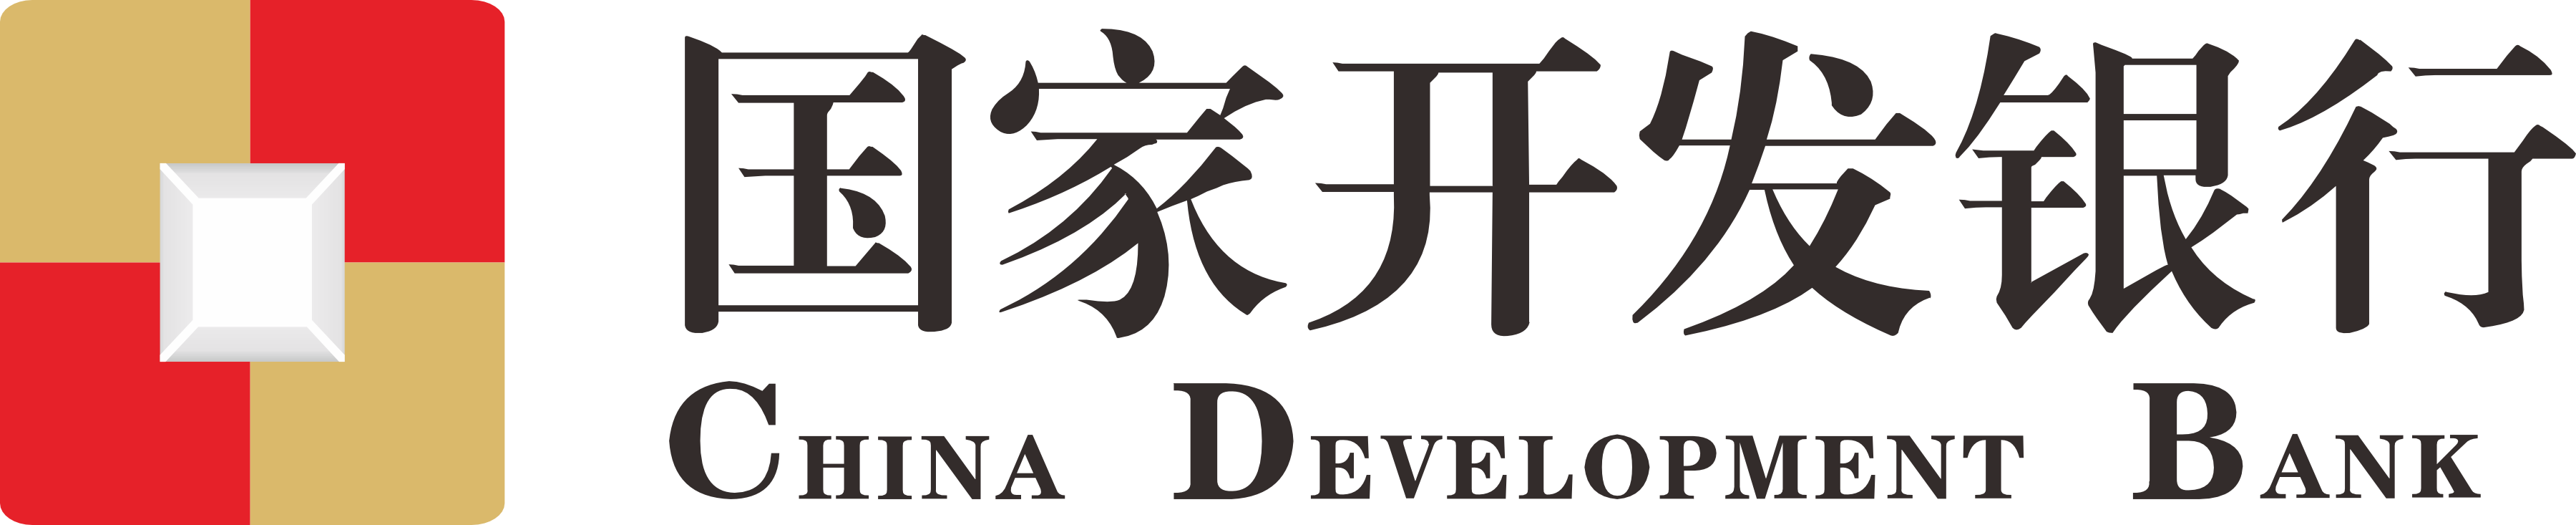 China Development Bank 国家开发银行 Company Profile On Chinaedge